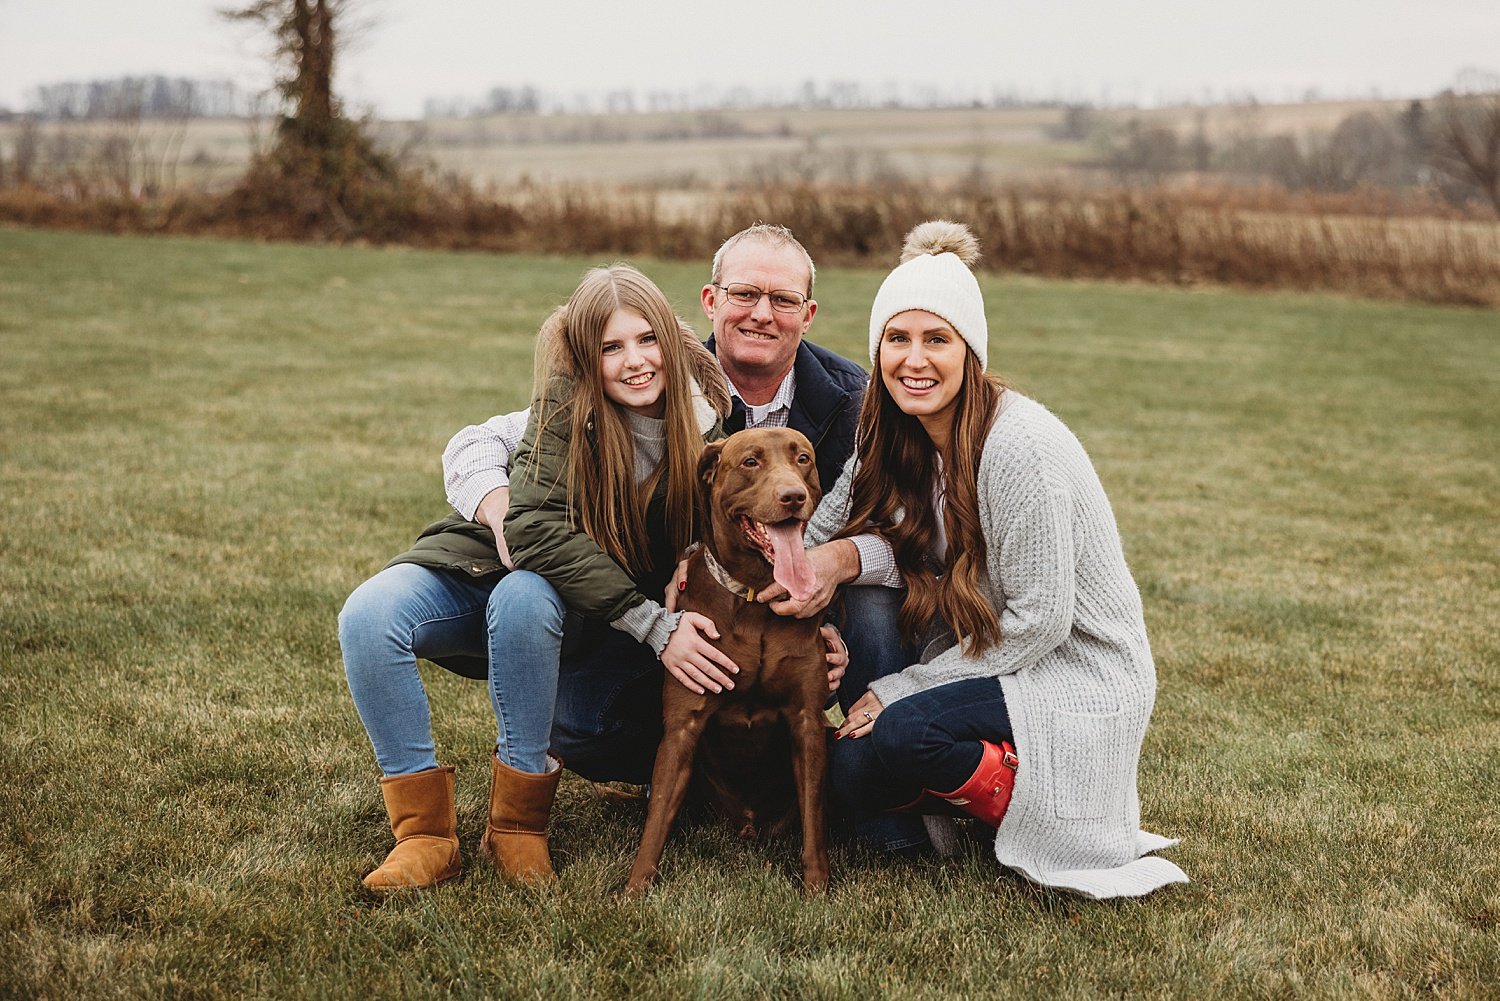 Barto Pennsylvania fall winter family portrait photoshoot photographer red hunter boots